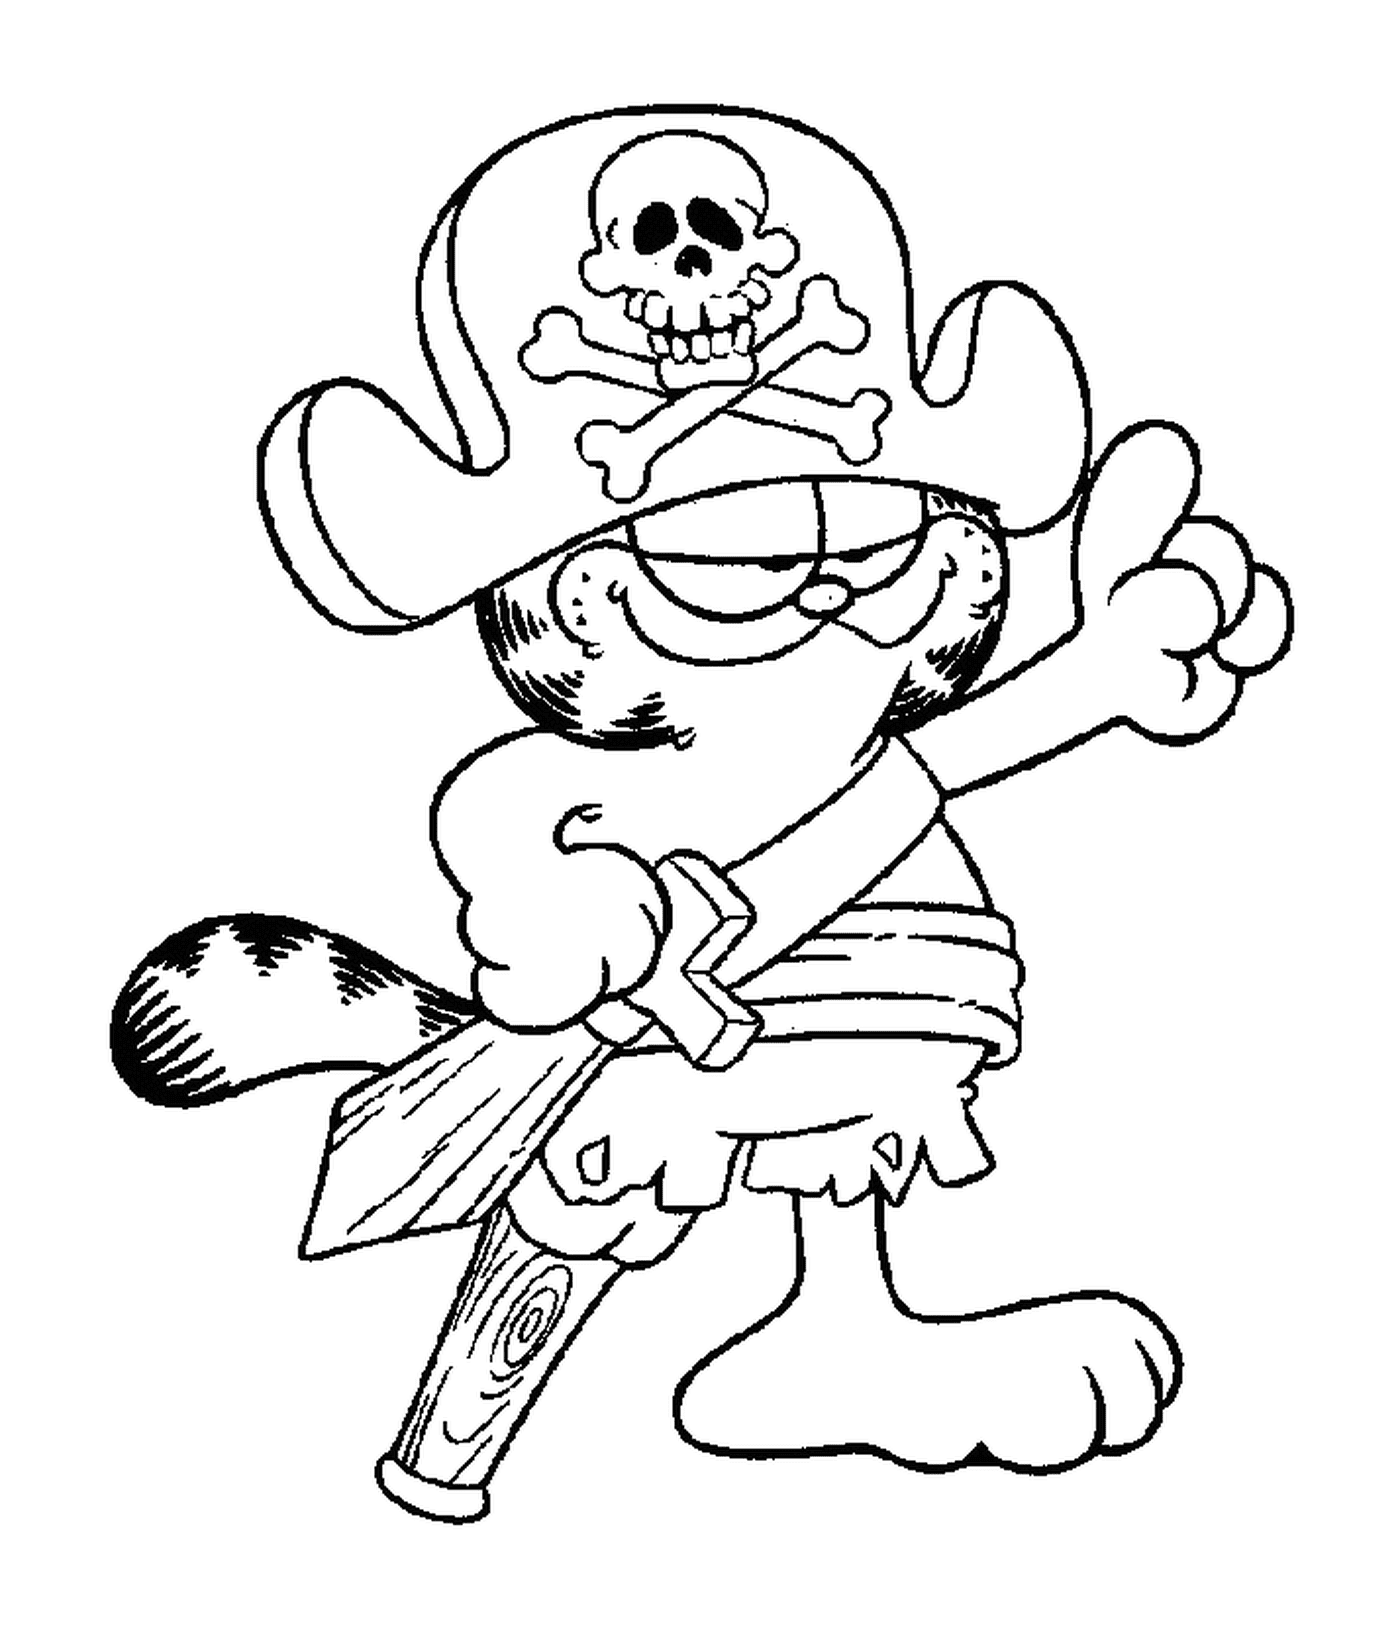  Garfield disfrazado de pirata 